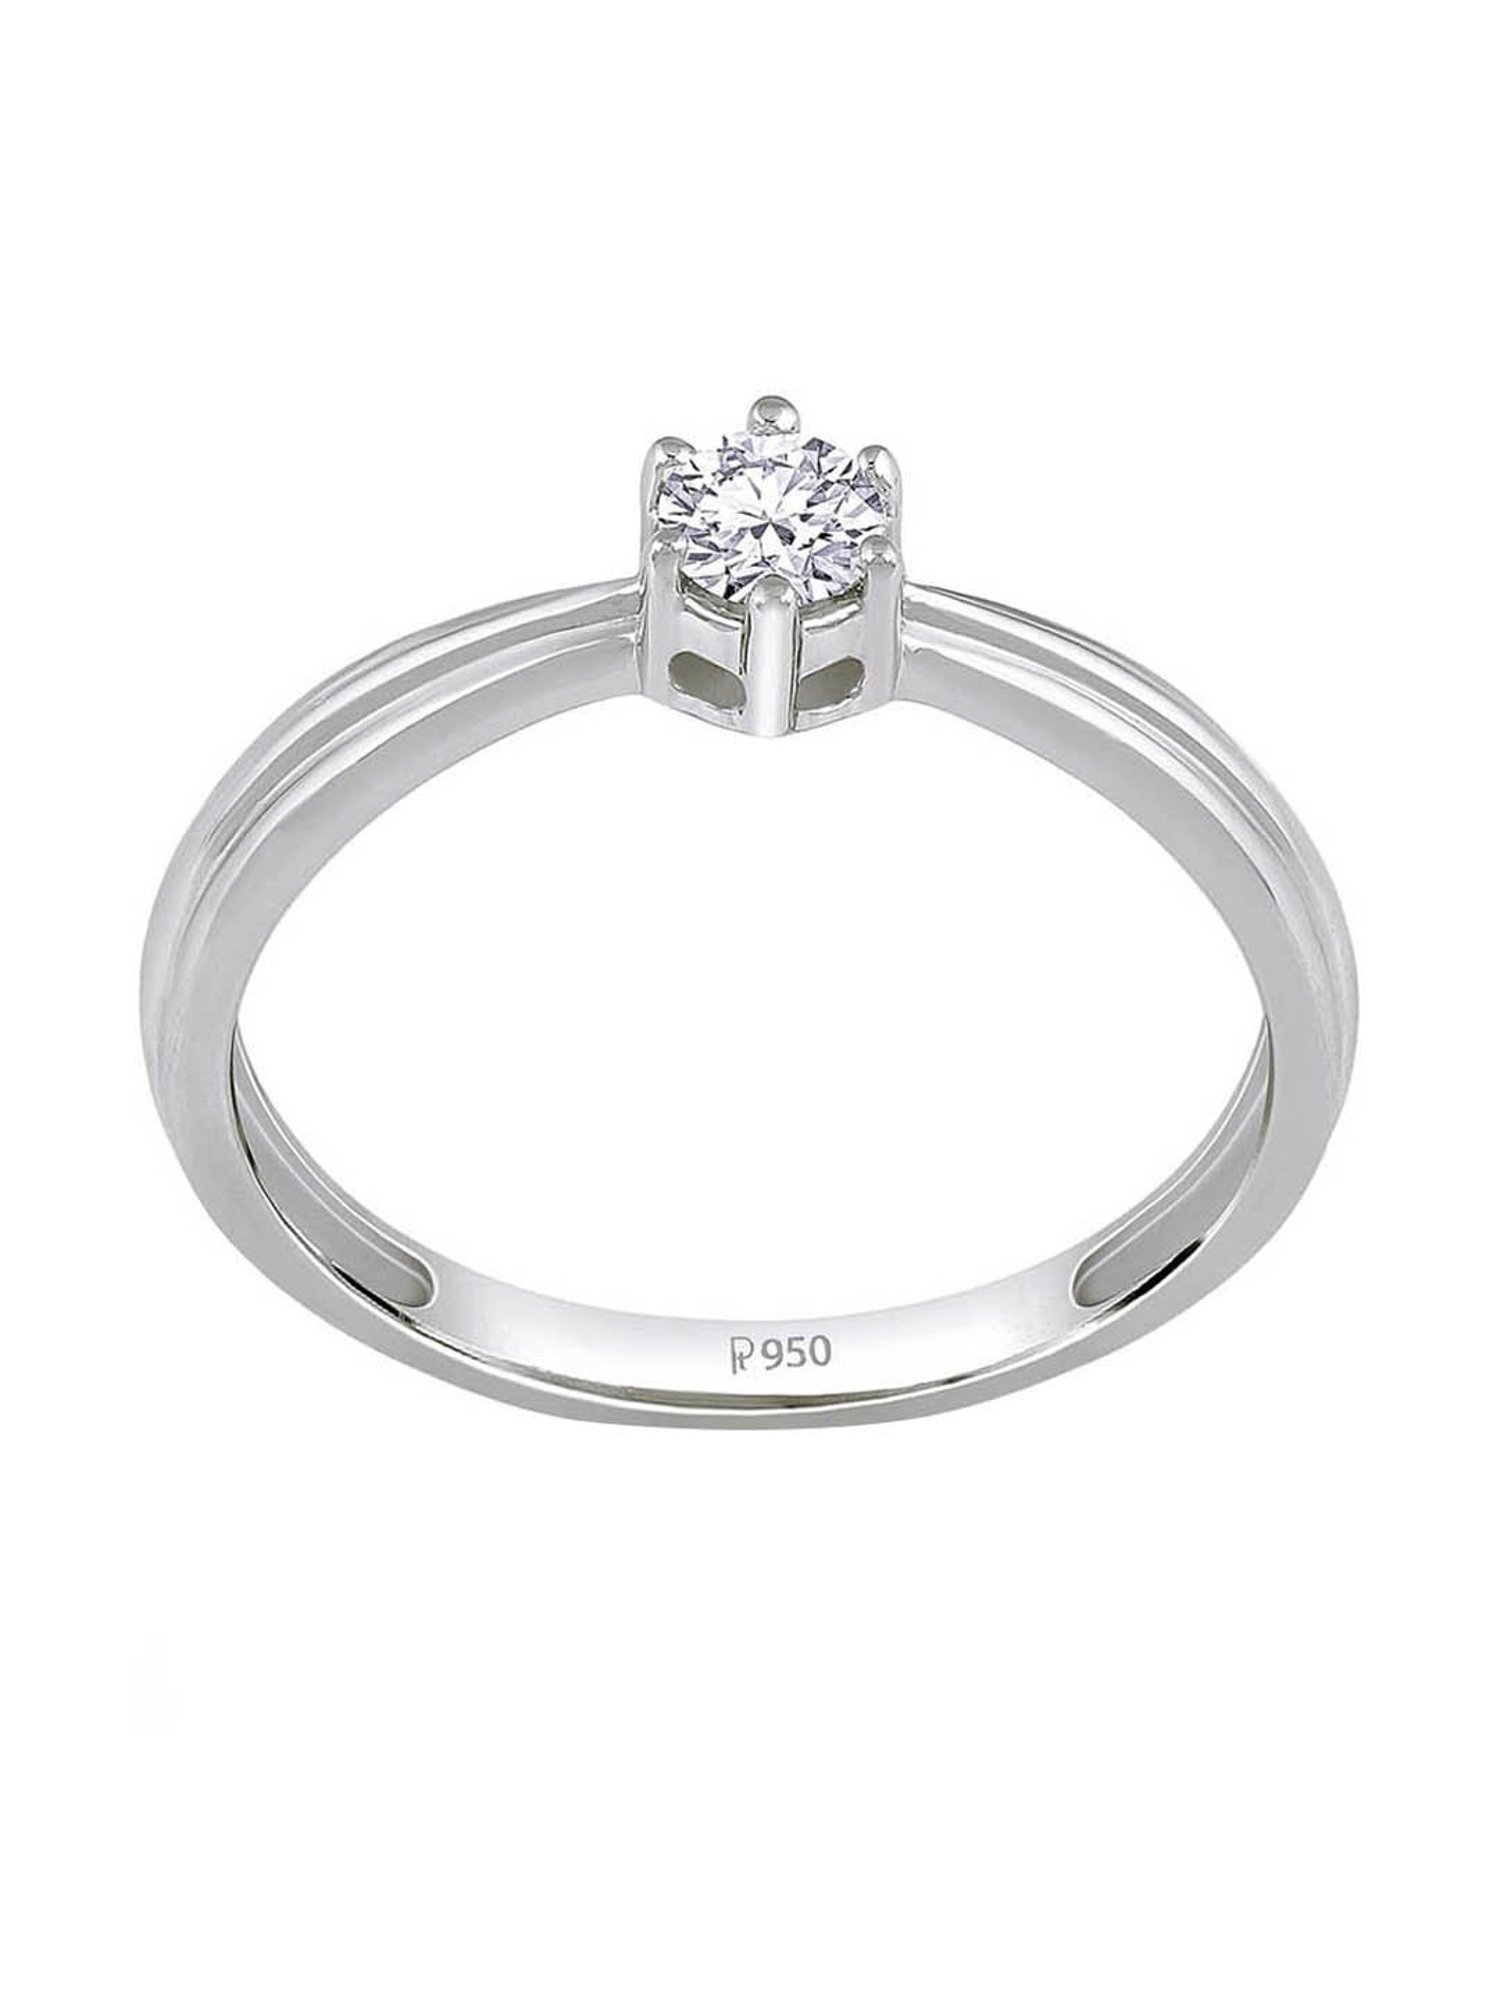 Buy White Gold Rings for Women by Malabar Gold & Diamonds Online | Ajio.com